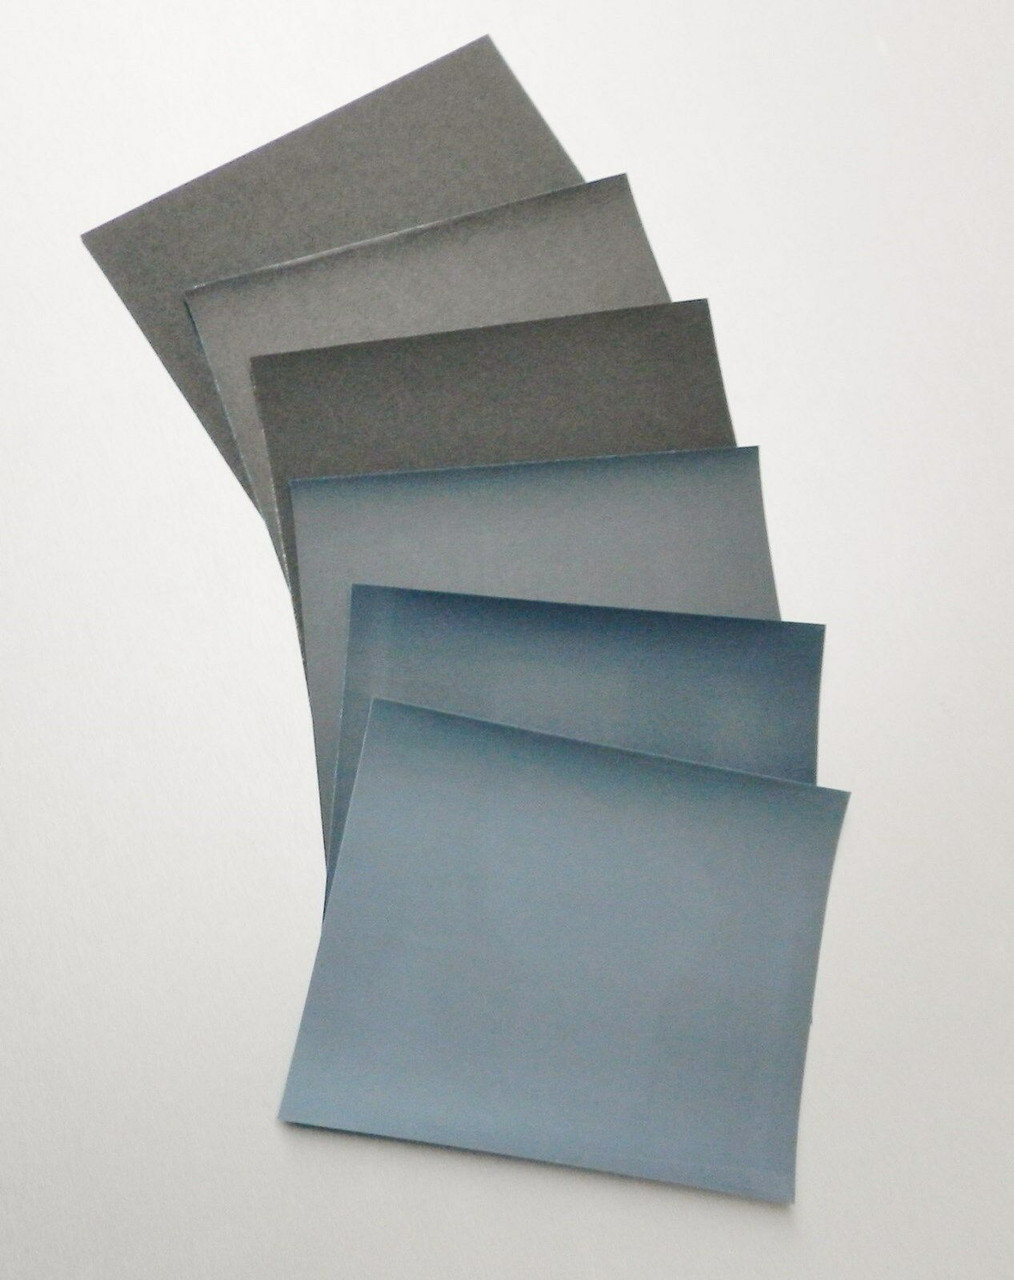 Matador Waterproof Sandpaper Wet or Dry Abrasive Paper 1500 Grit Per Pack of 50 Made in Germany